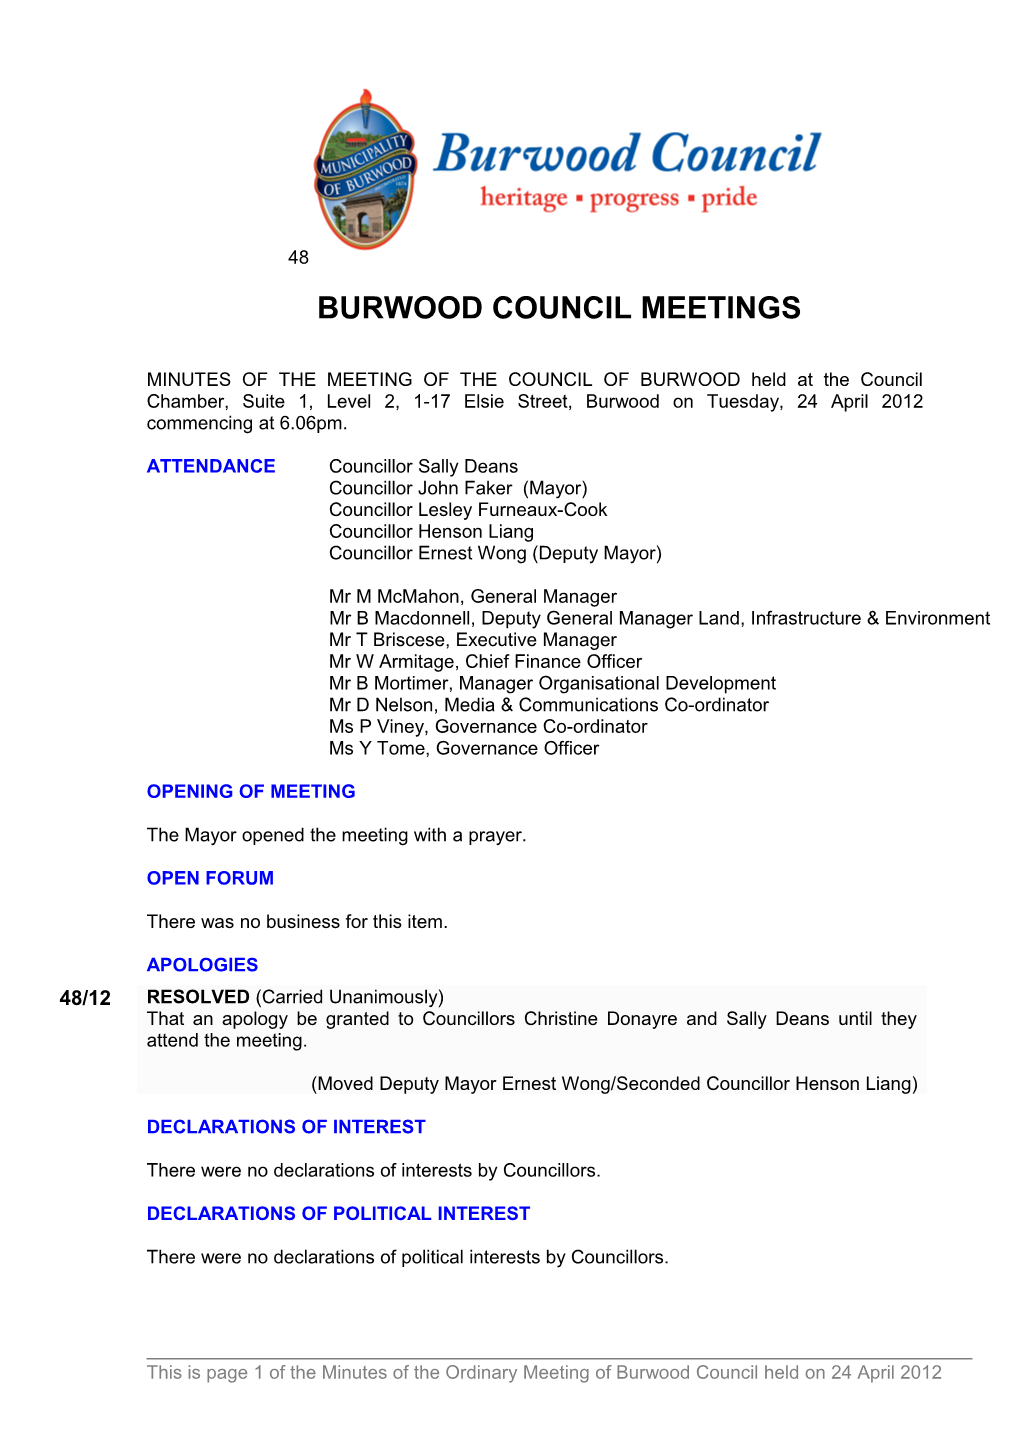 Pro-Forma Minutes of Burwood Council Meetings - 24 April 2012